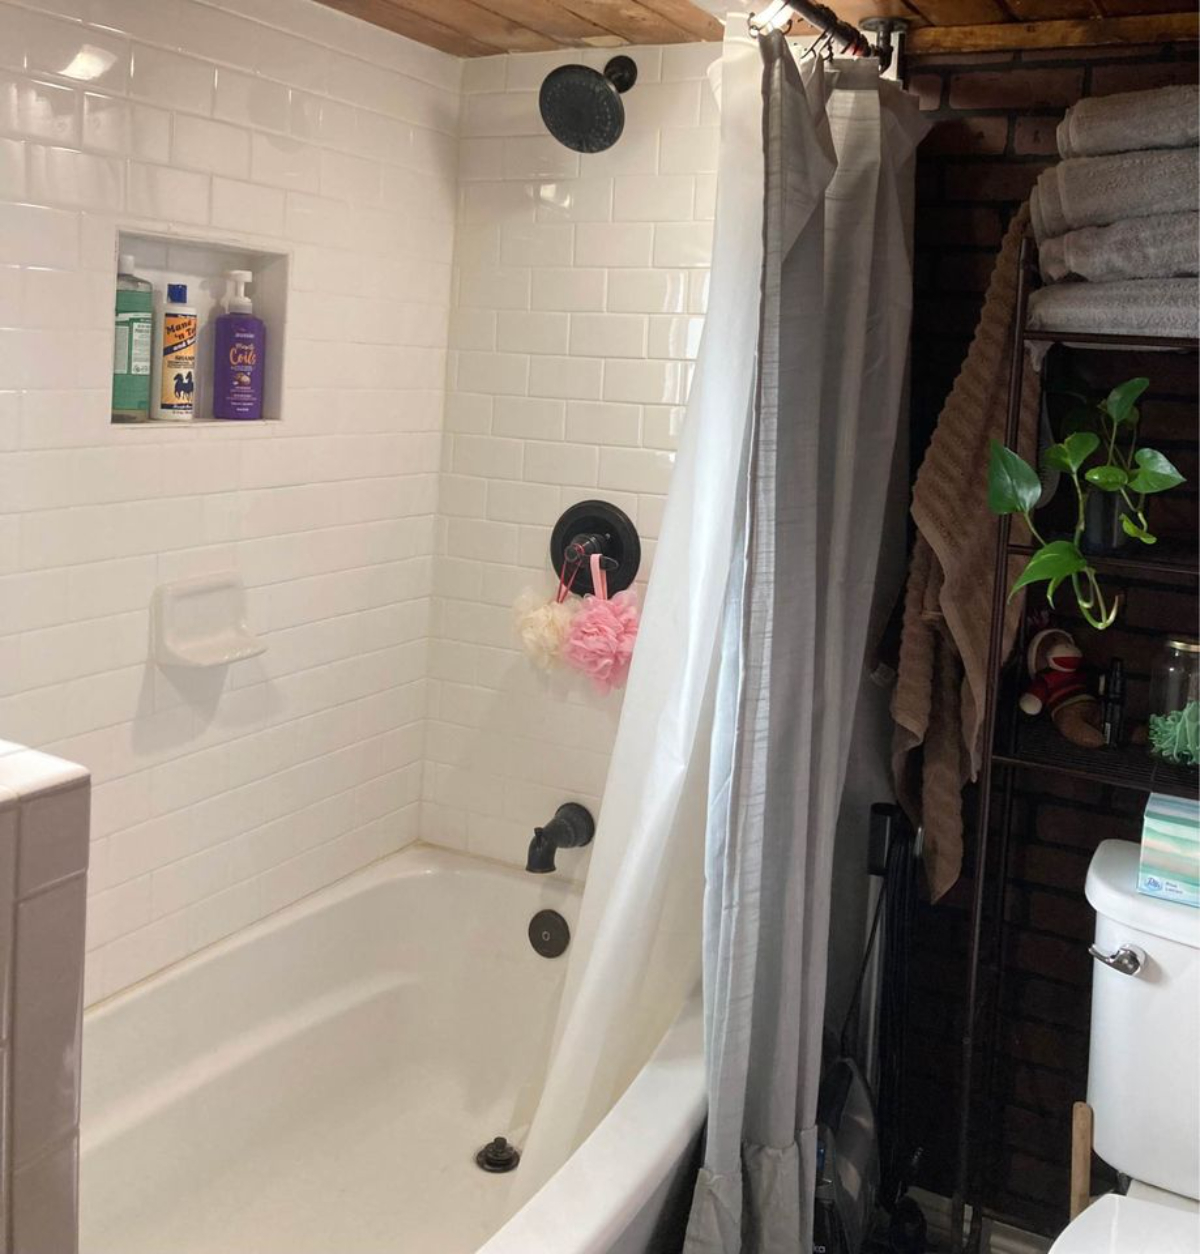 It has stylish bathtub in 30' Budget-Friendly Tiny House